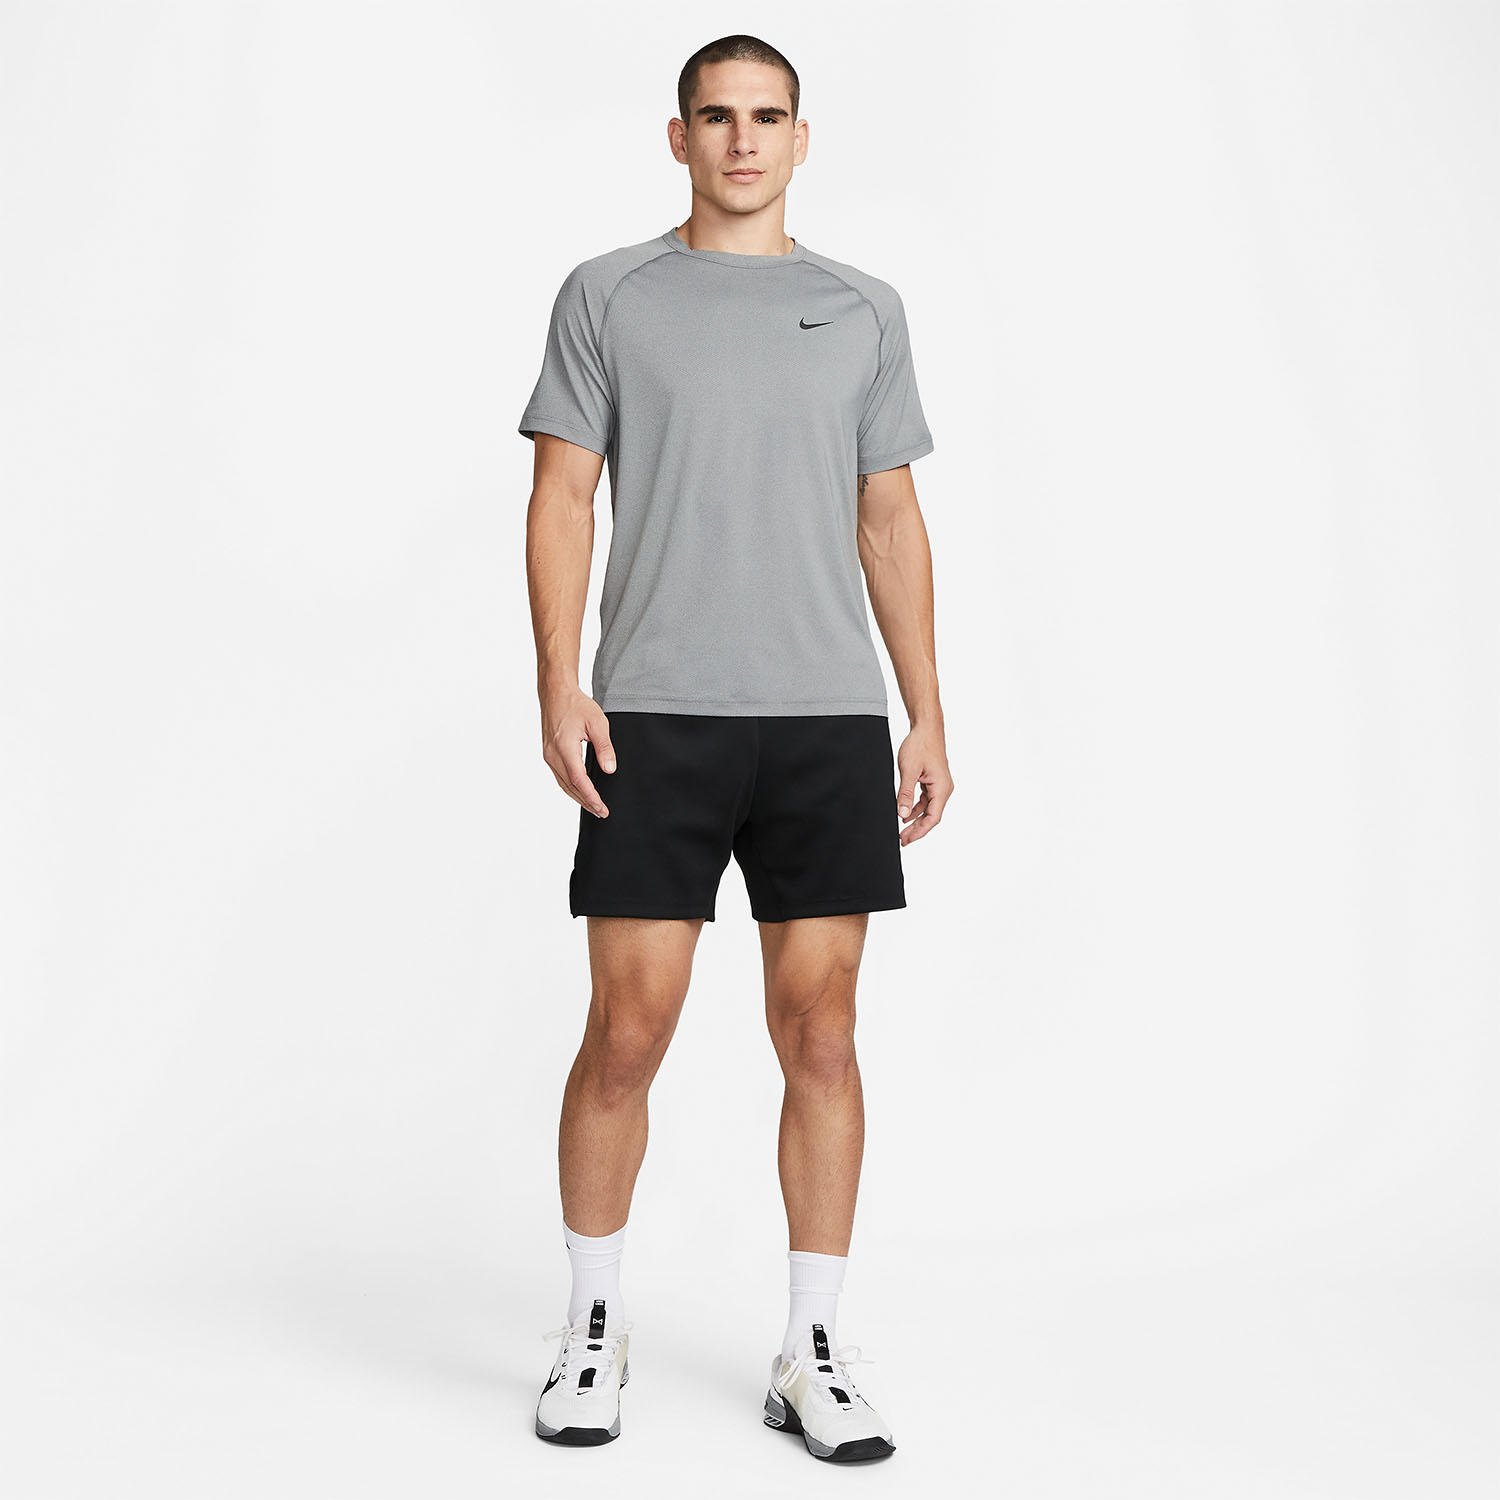 Nike Dri-FIT Ready Camiseta - Smoke Gray/Heater/Black